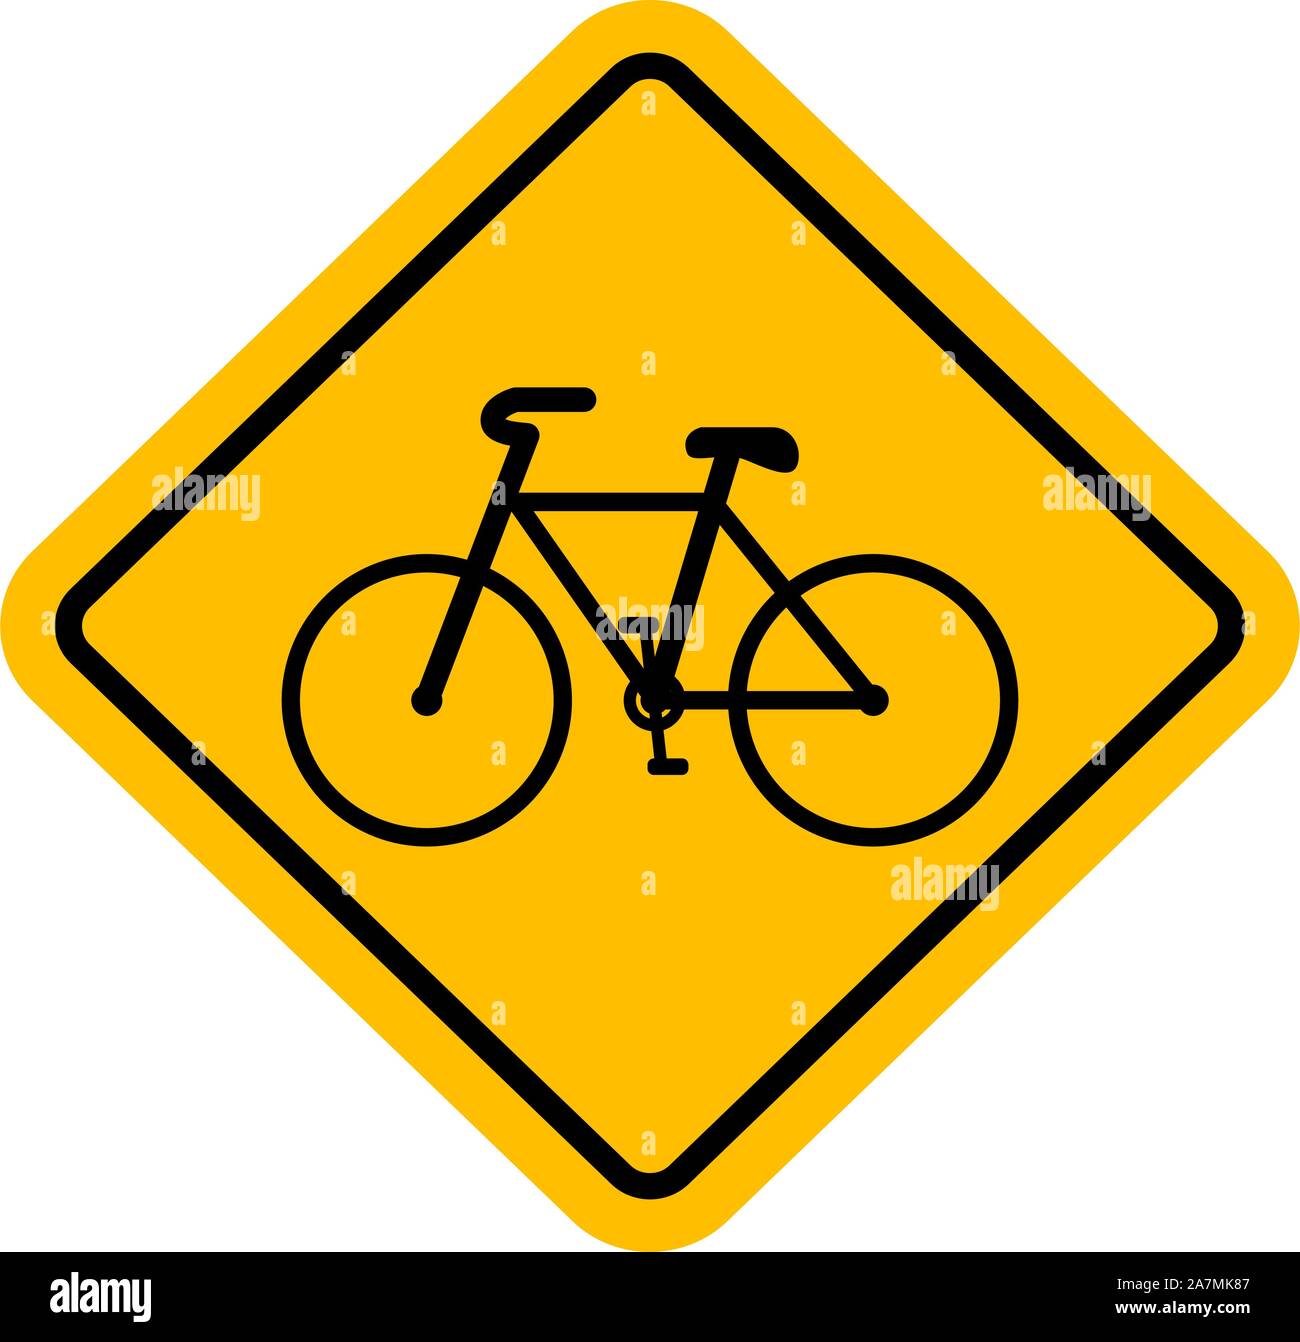 Bicycle crossing sign vector illustration. Yellow diamond board - Traffic symbol Stock Vector